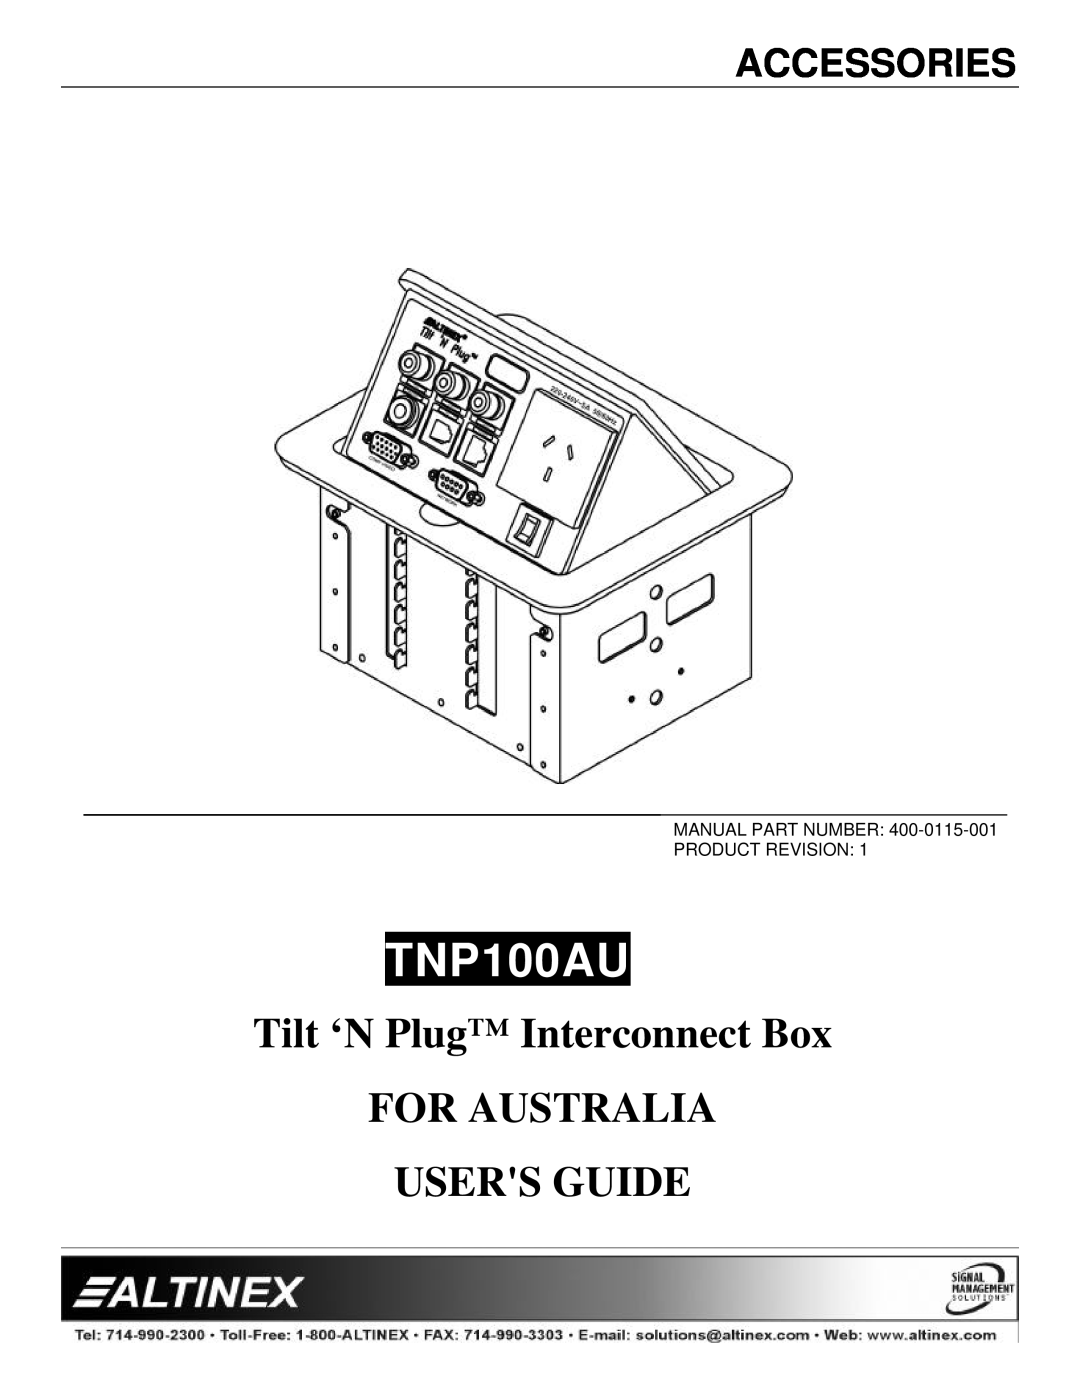 Altinex manual Accessories, TNP100AUUN, Tilt ‘N Plug Interconnect Box FOR AUSTRALIA USERS GUIDE 